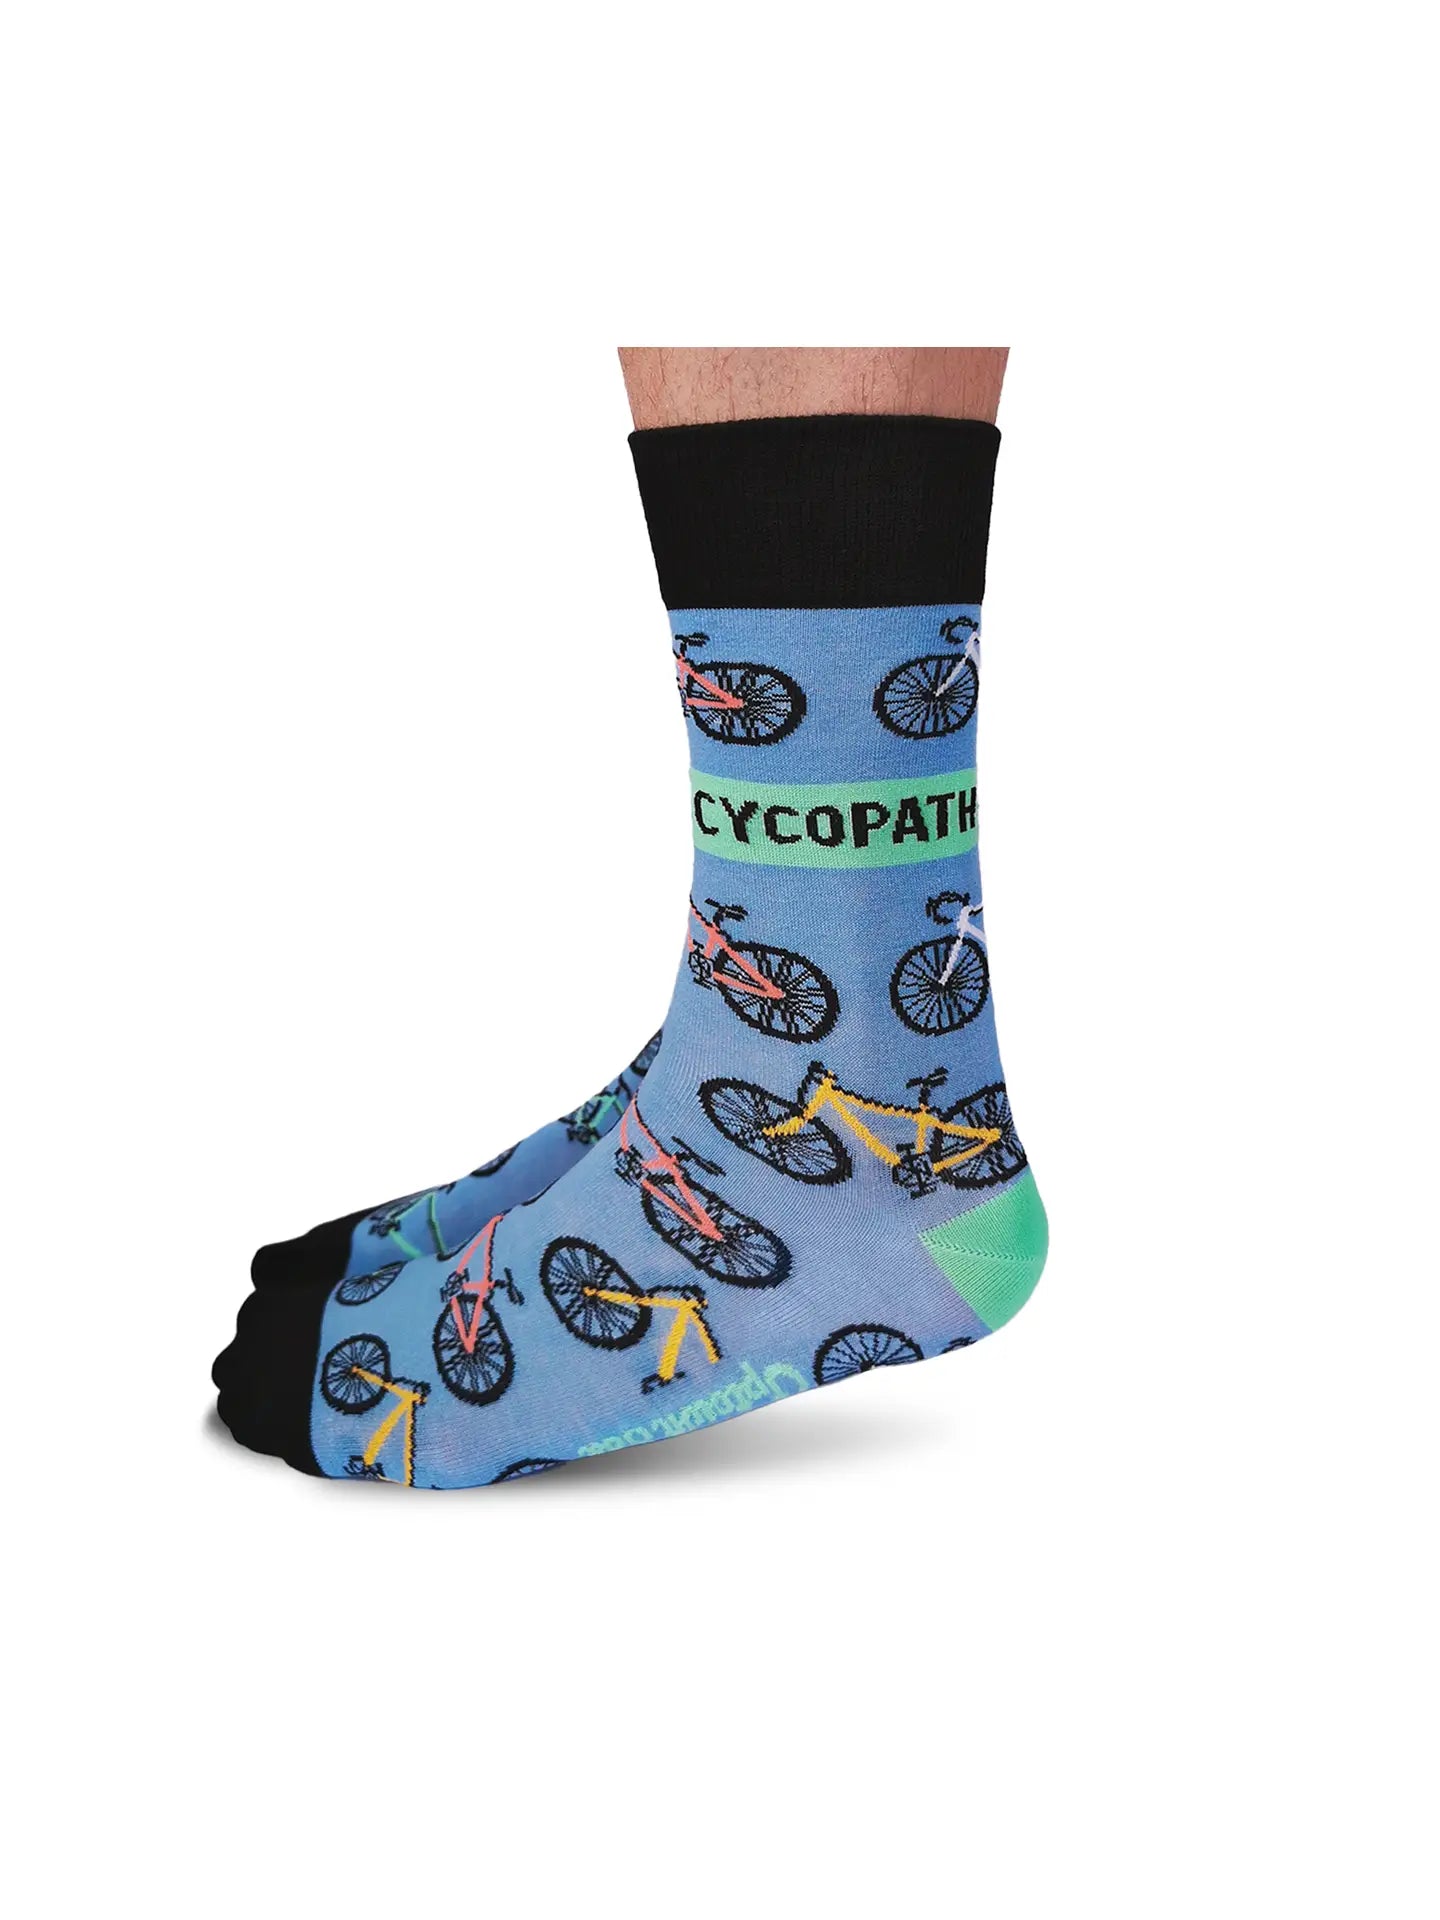 Cycopath Socks